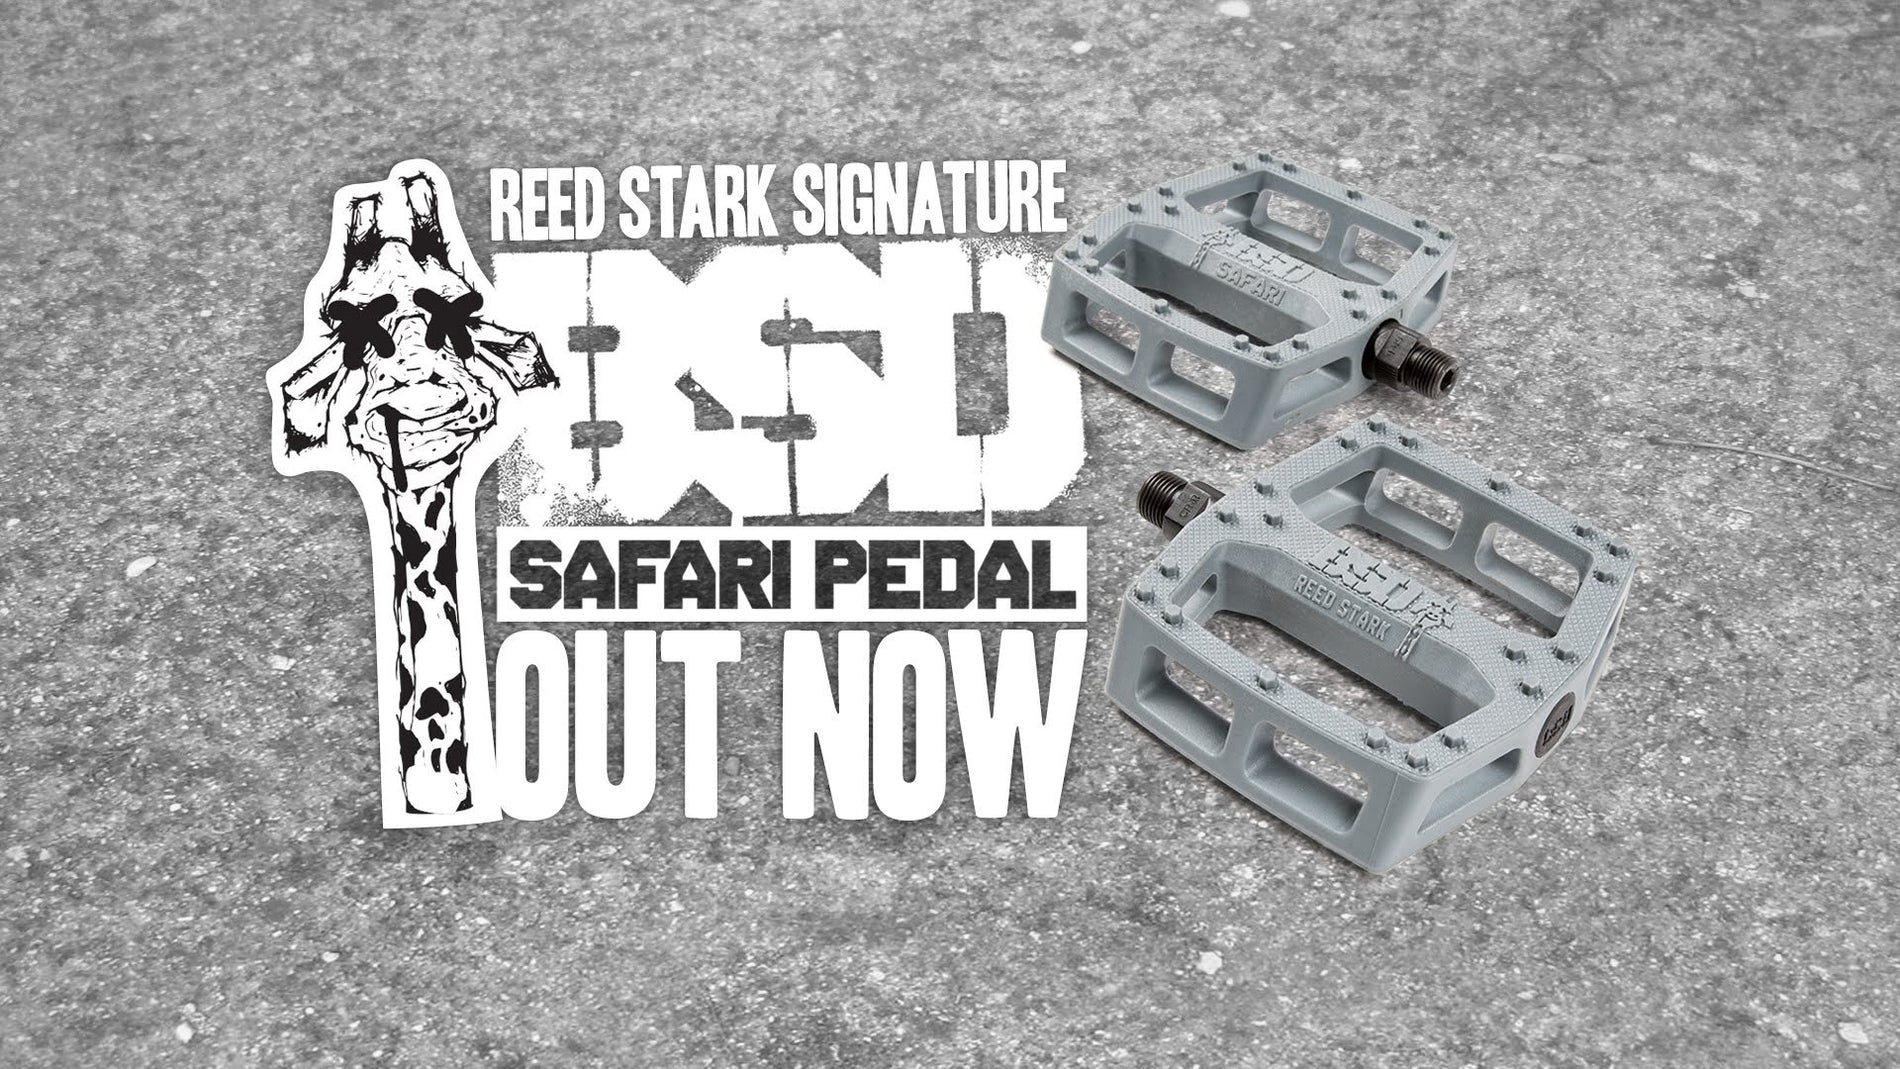 Reed Stark Safari Pedal